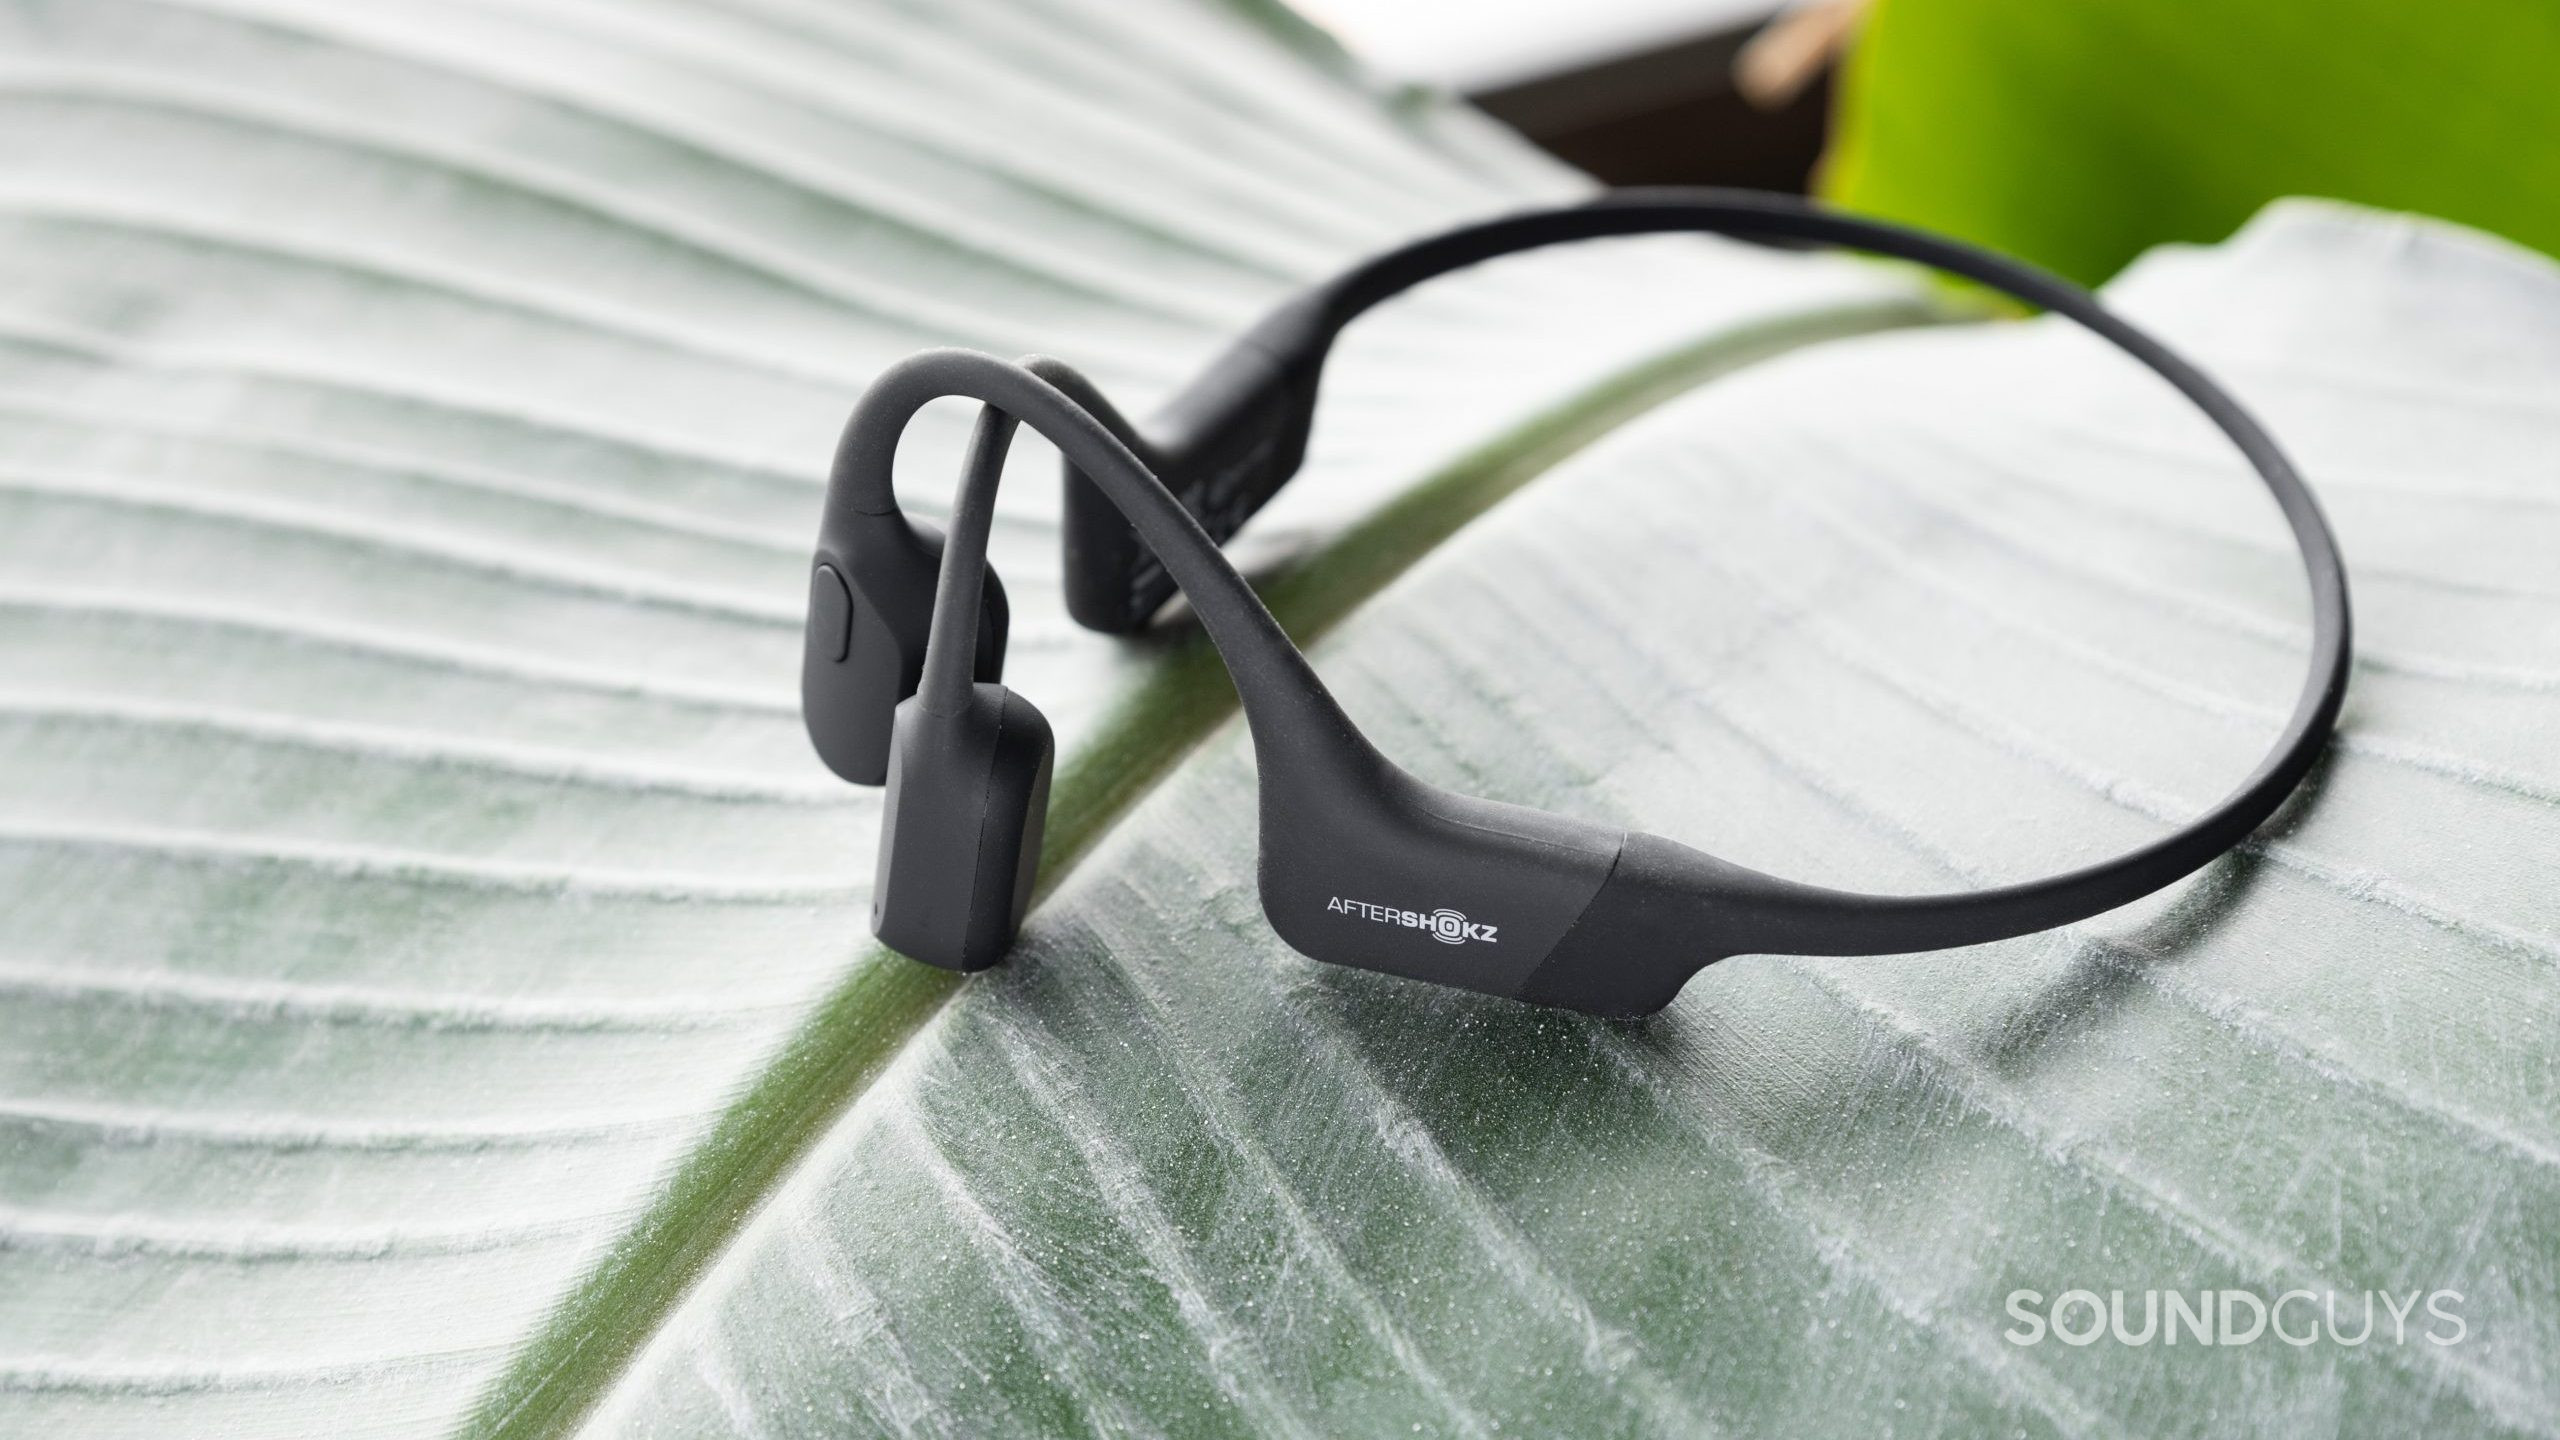 The Aftershokz Aeropex bone conduction headphones rest on a leaf font where the vein splits.